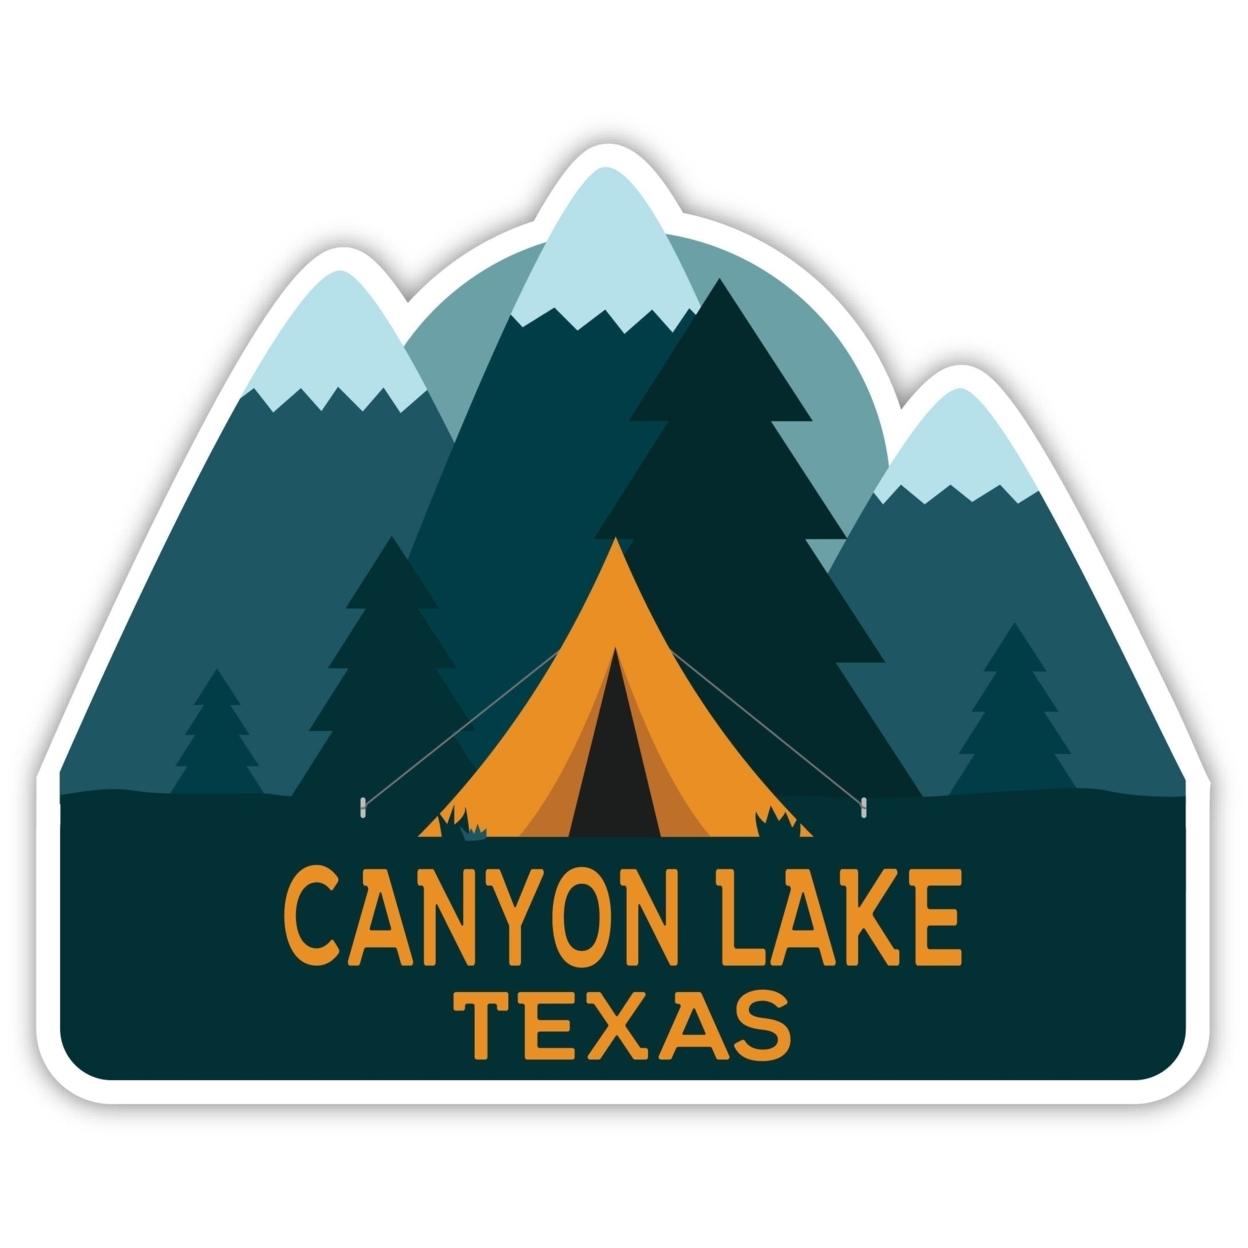 Canyon Lake Texas Souvenir Decorative Stickers (Choose Theme And Size) - Single Unit, 12-Inch, Adventures Awaits